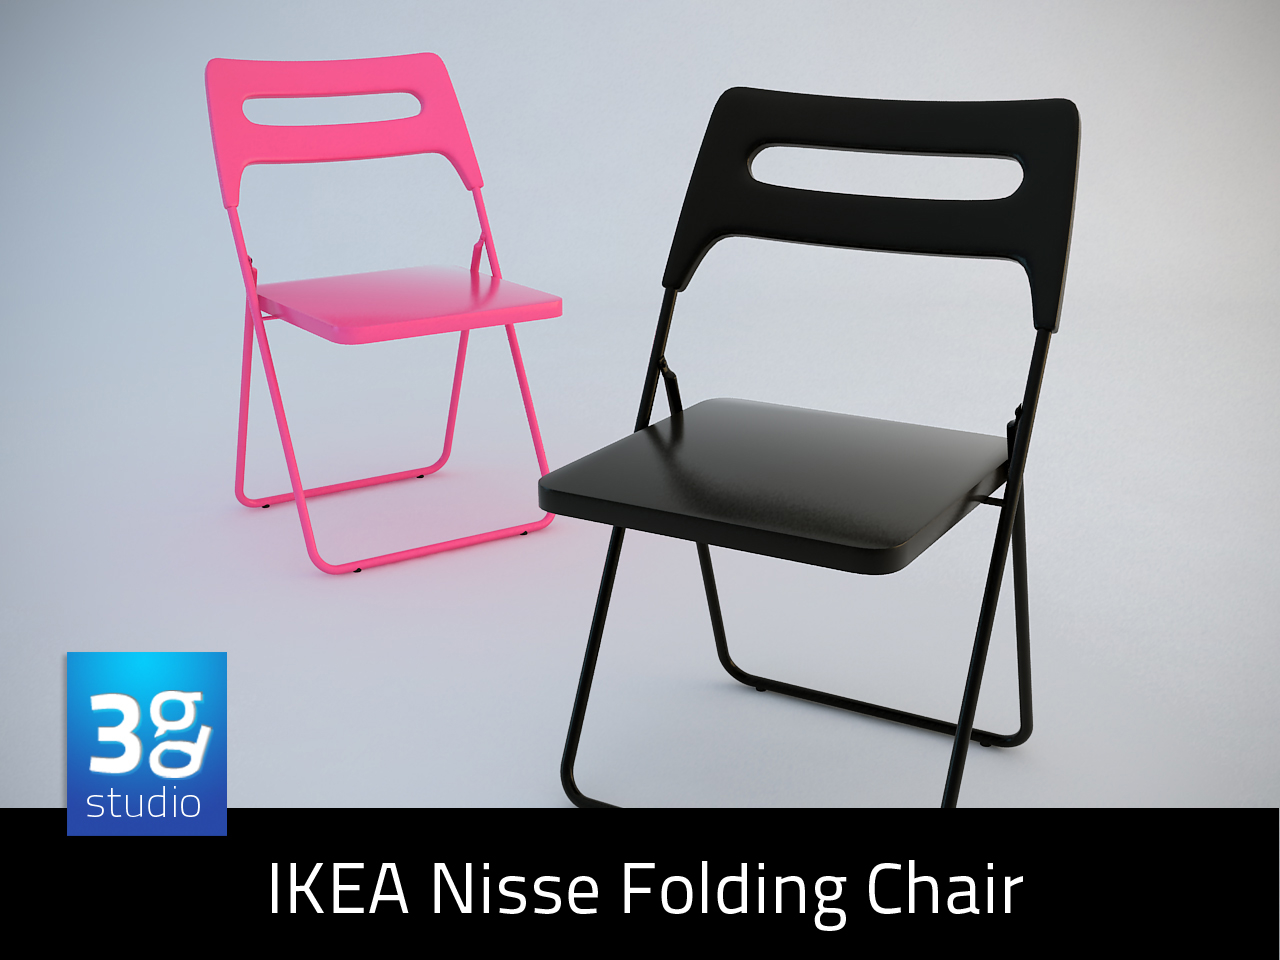 Ikea Nisse Folding Chair Max